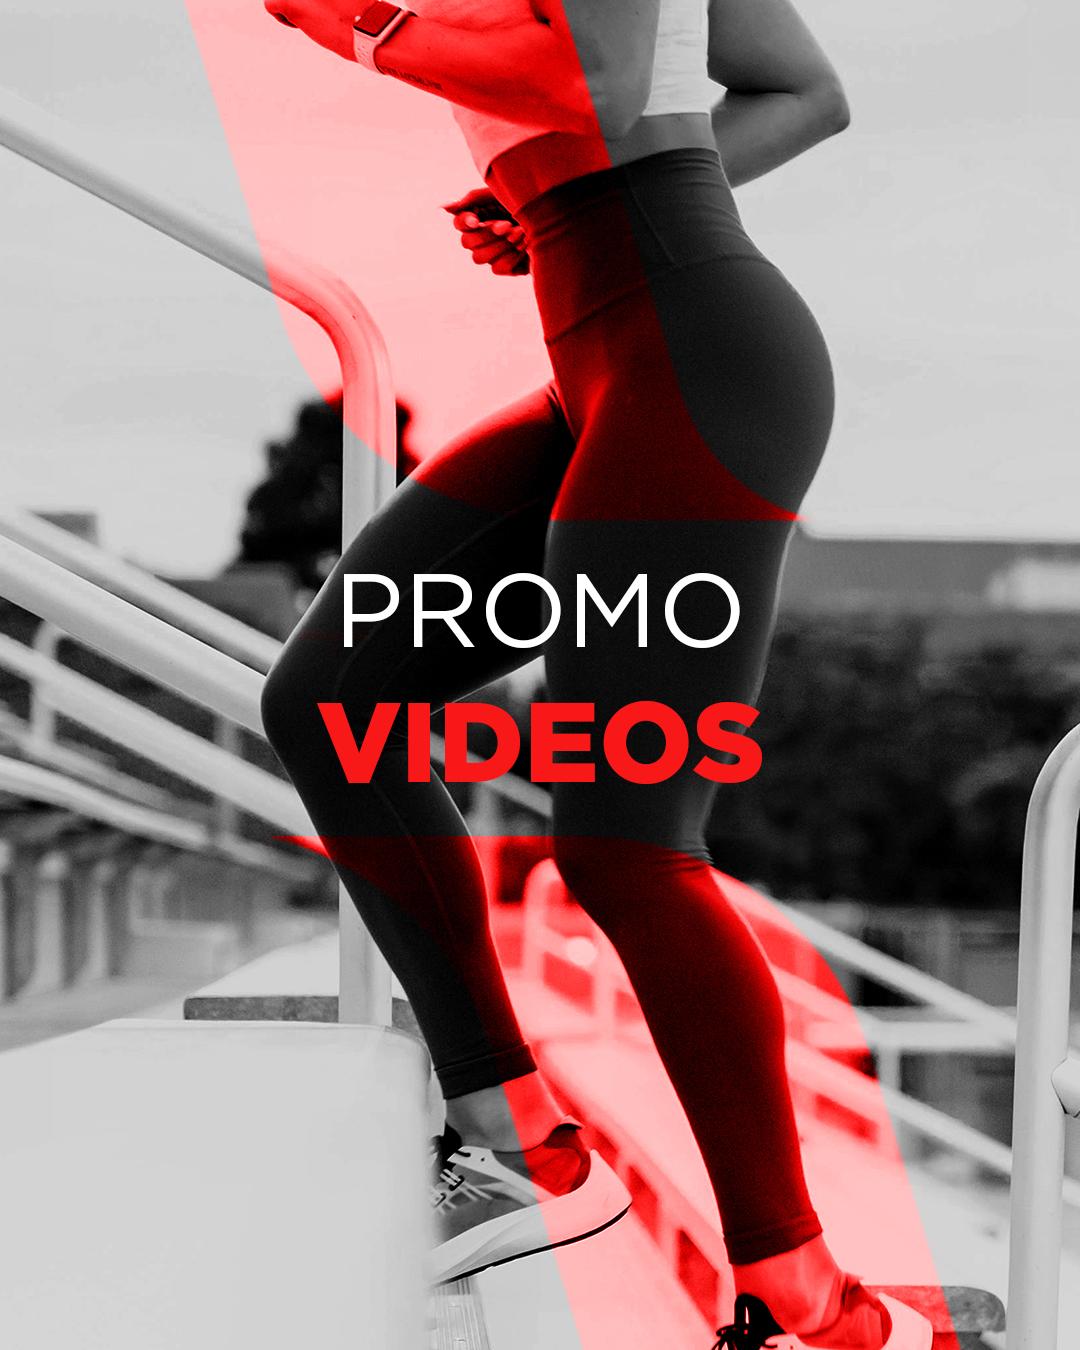 Promo Videos, Videography, Studio Shoot, Location Shoot, Professional Video Shoots